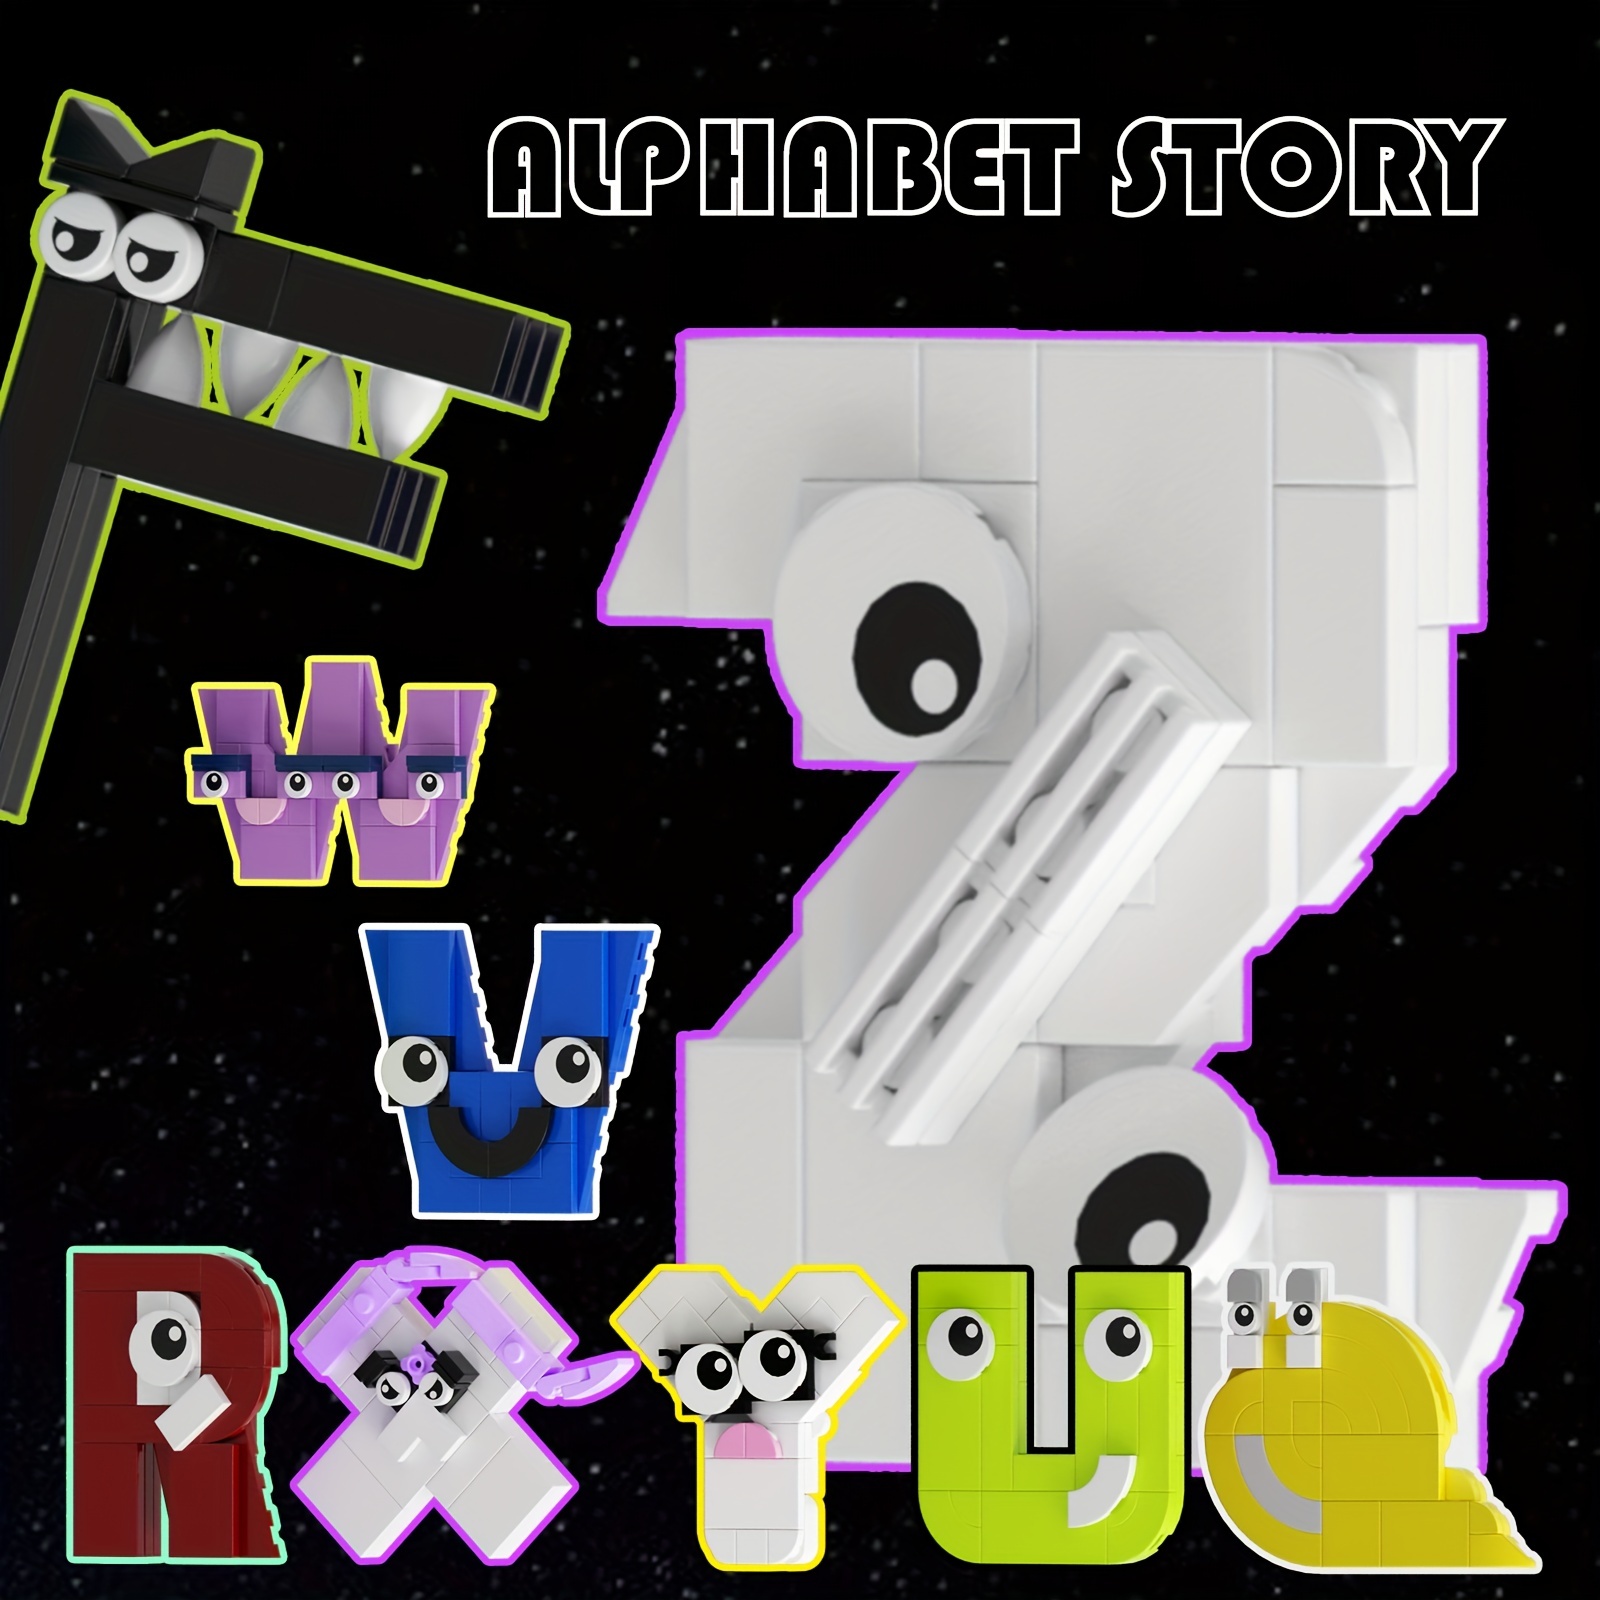 Alphabet Lore Building Blocks 26 Letter A-Z Gift for Children